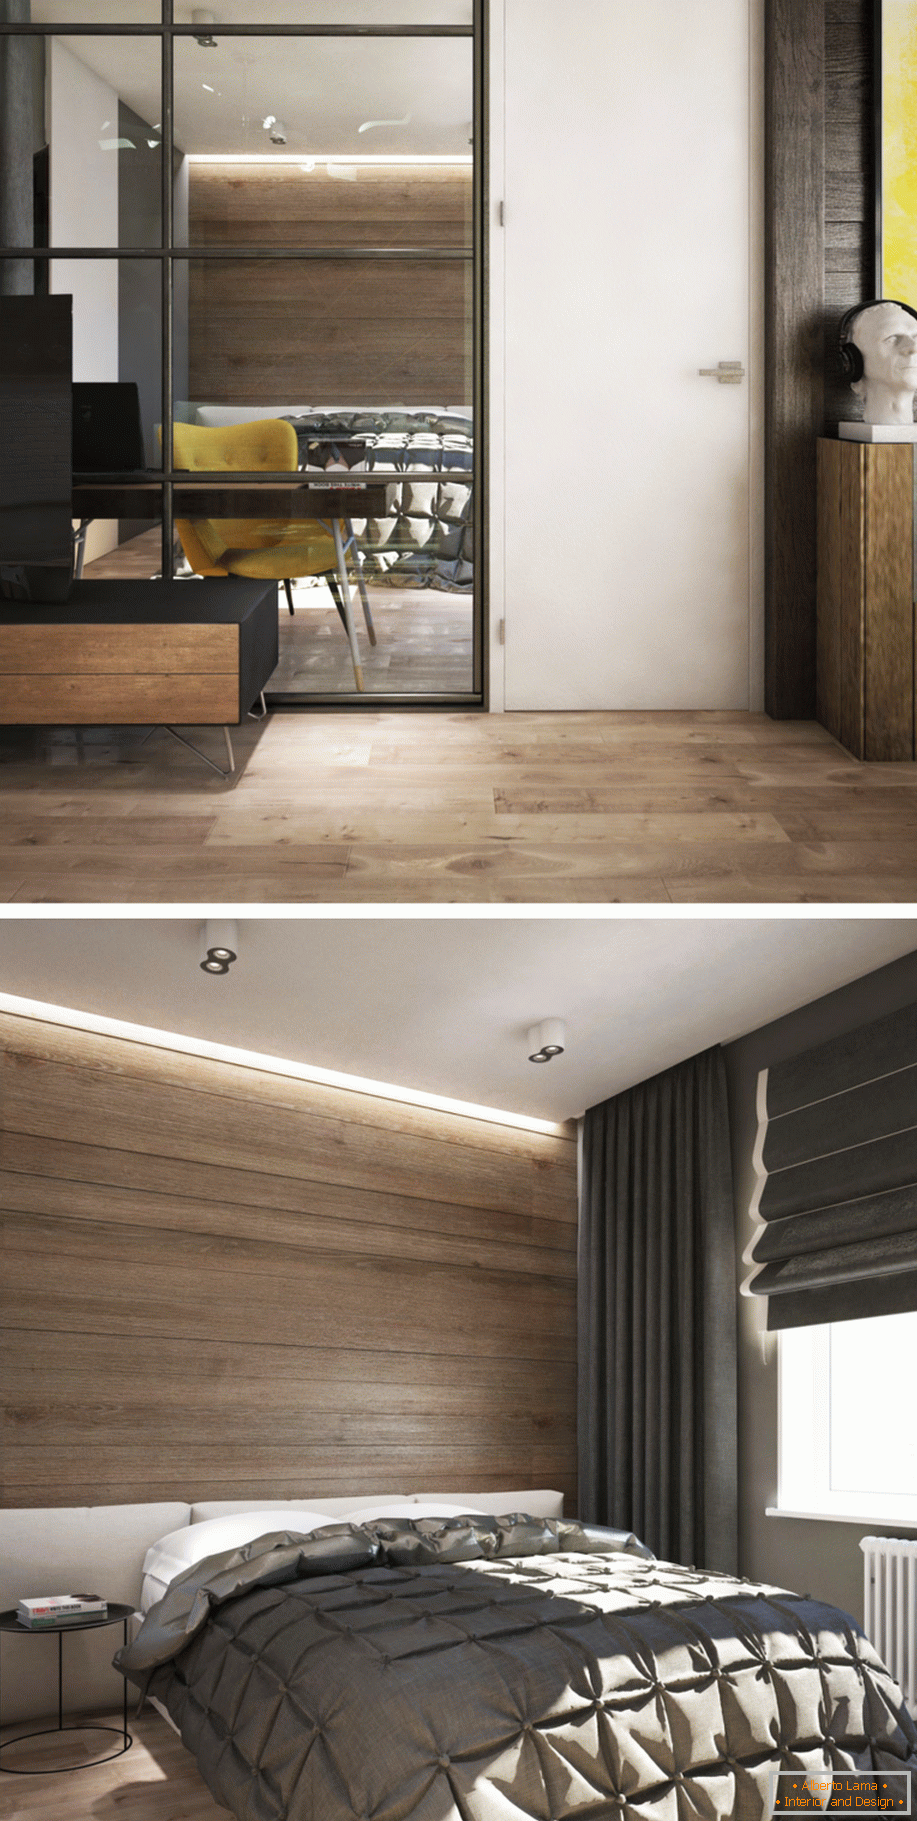 Loft style interior design